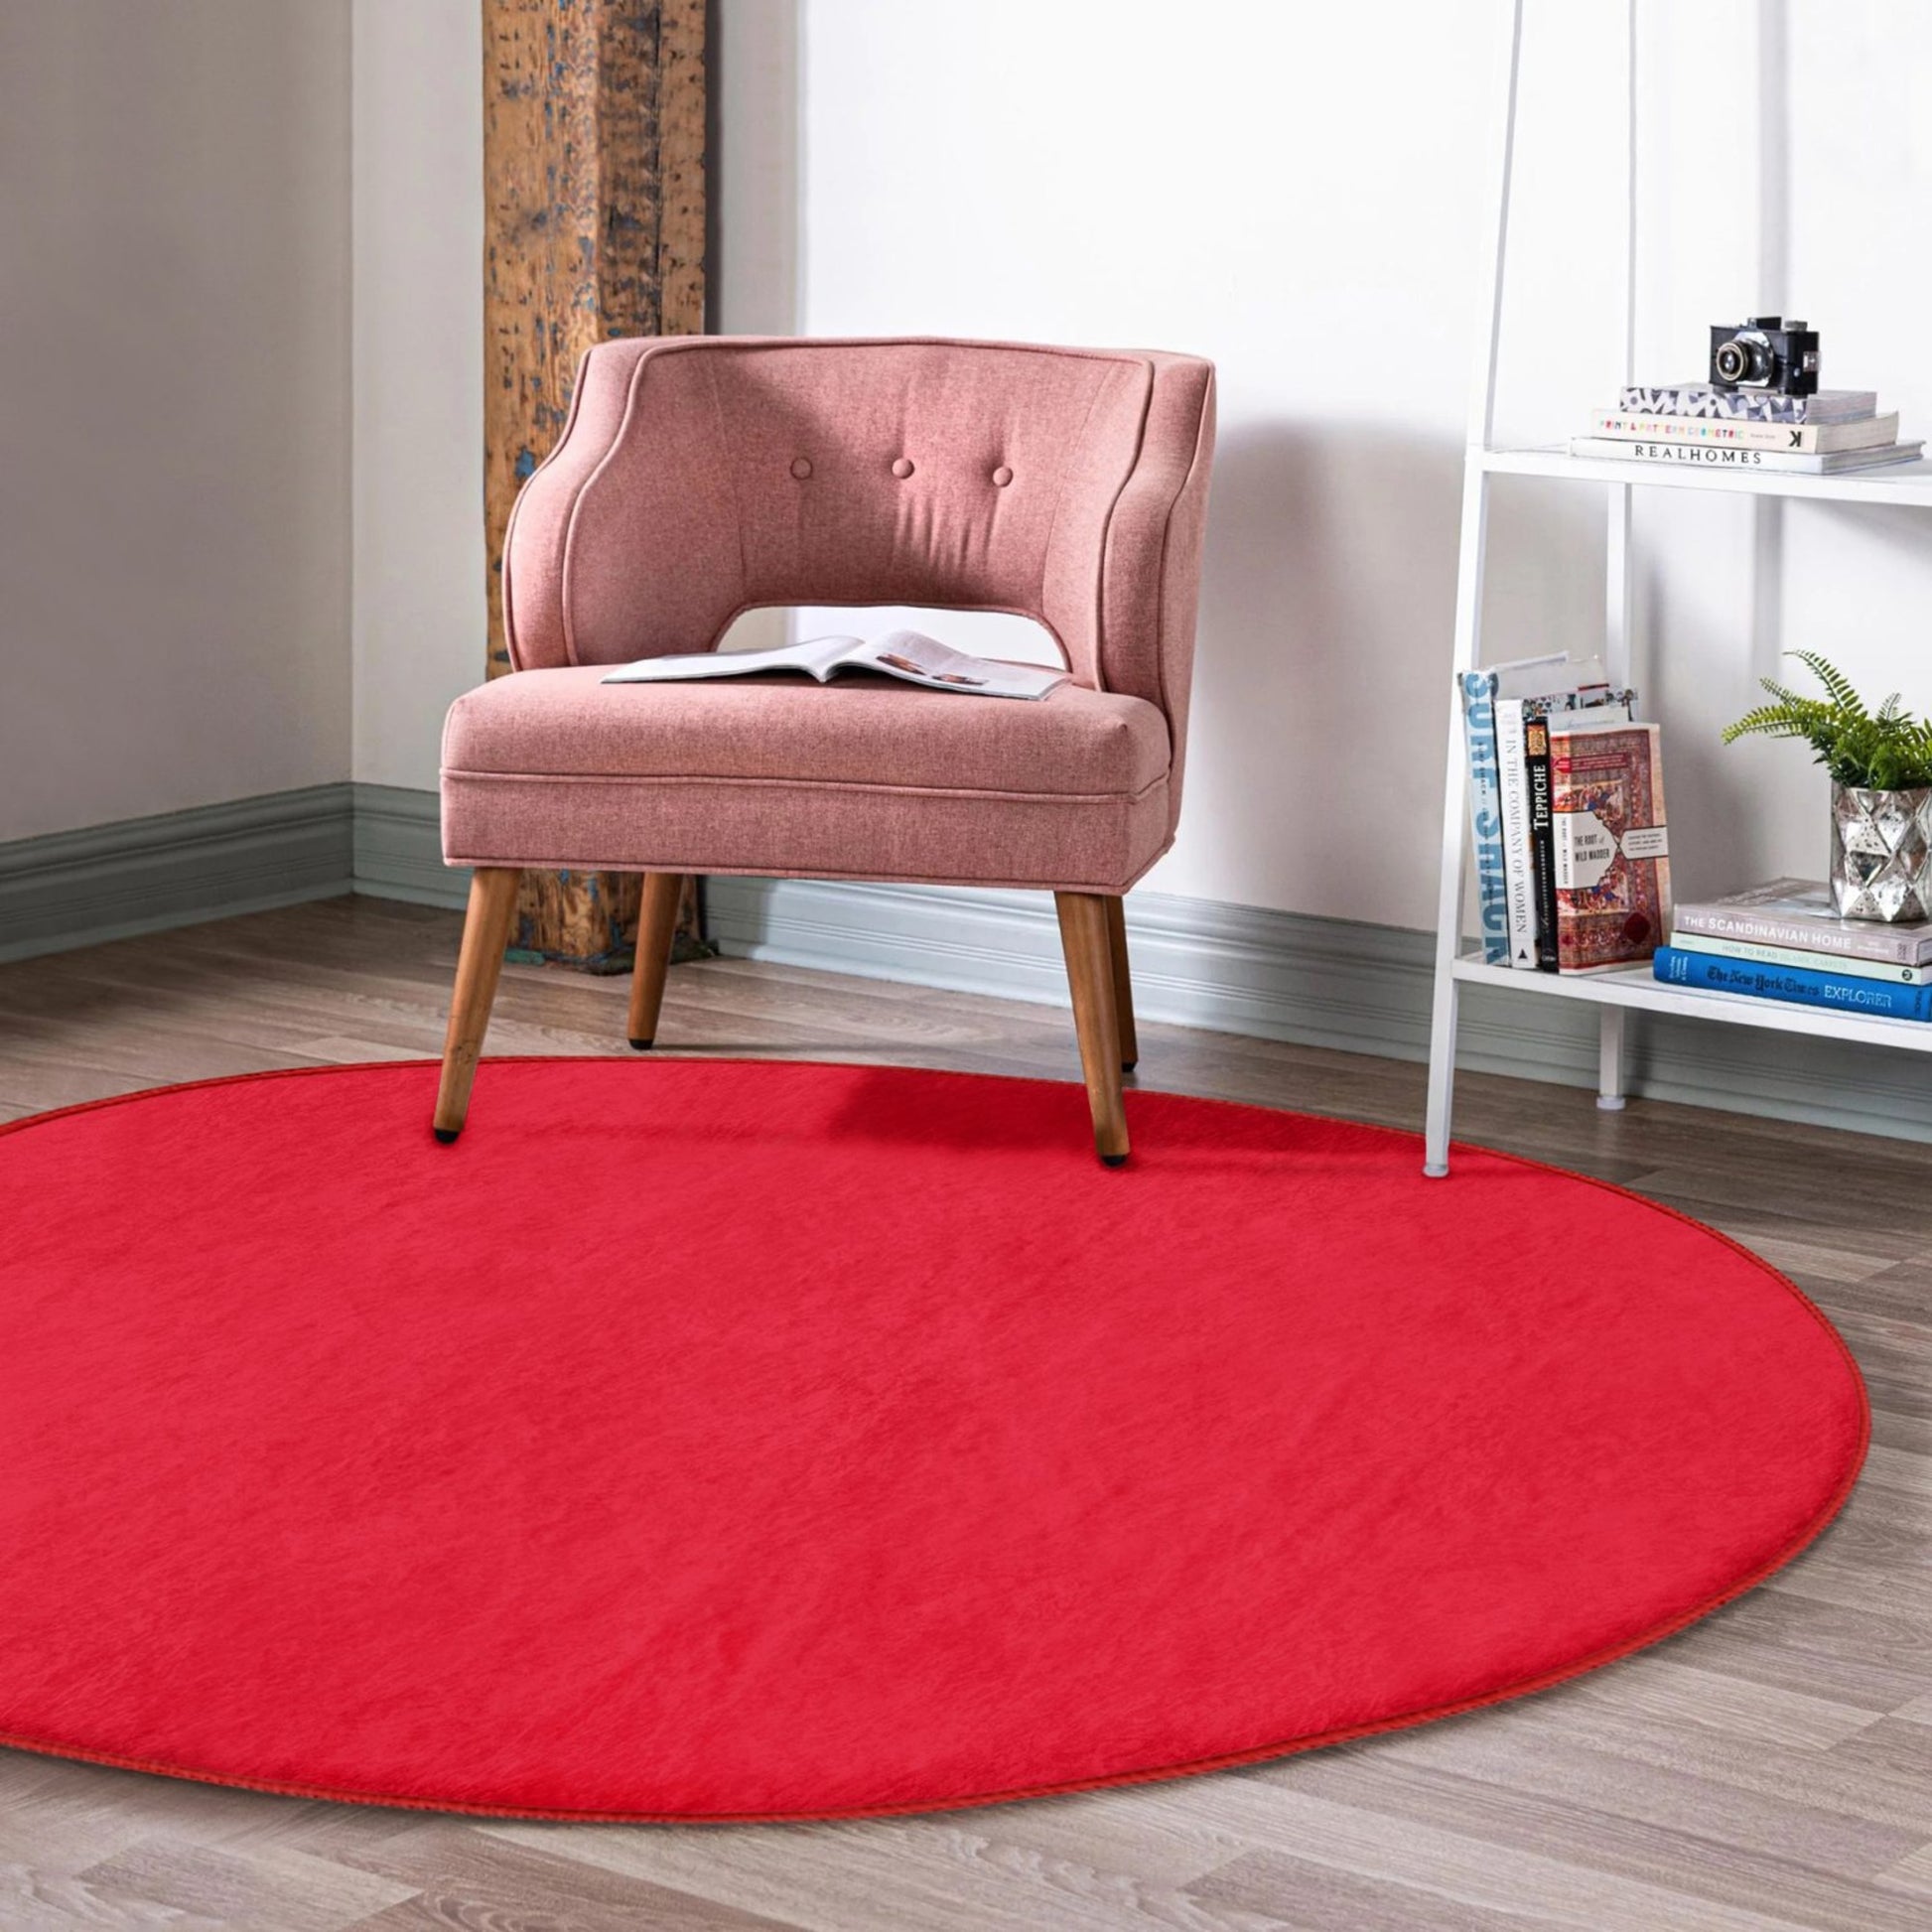 Vibrant Round Rug for Living Room Decor